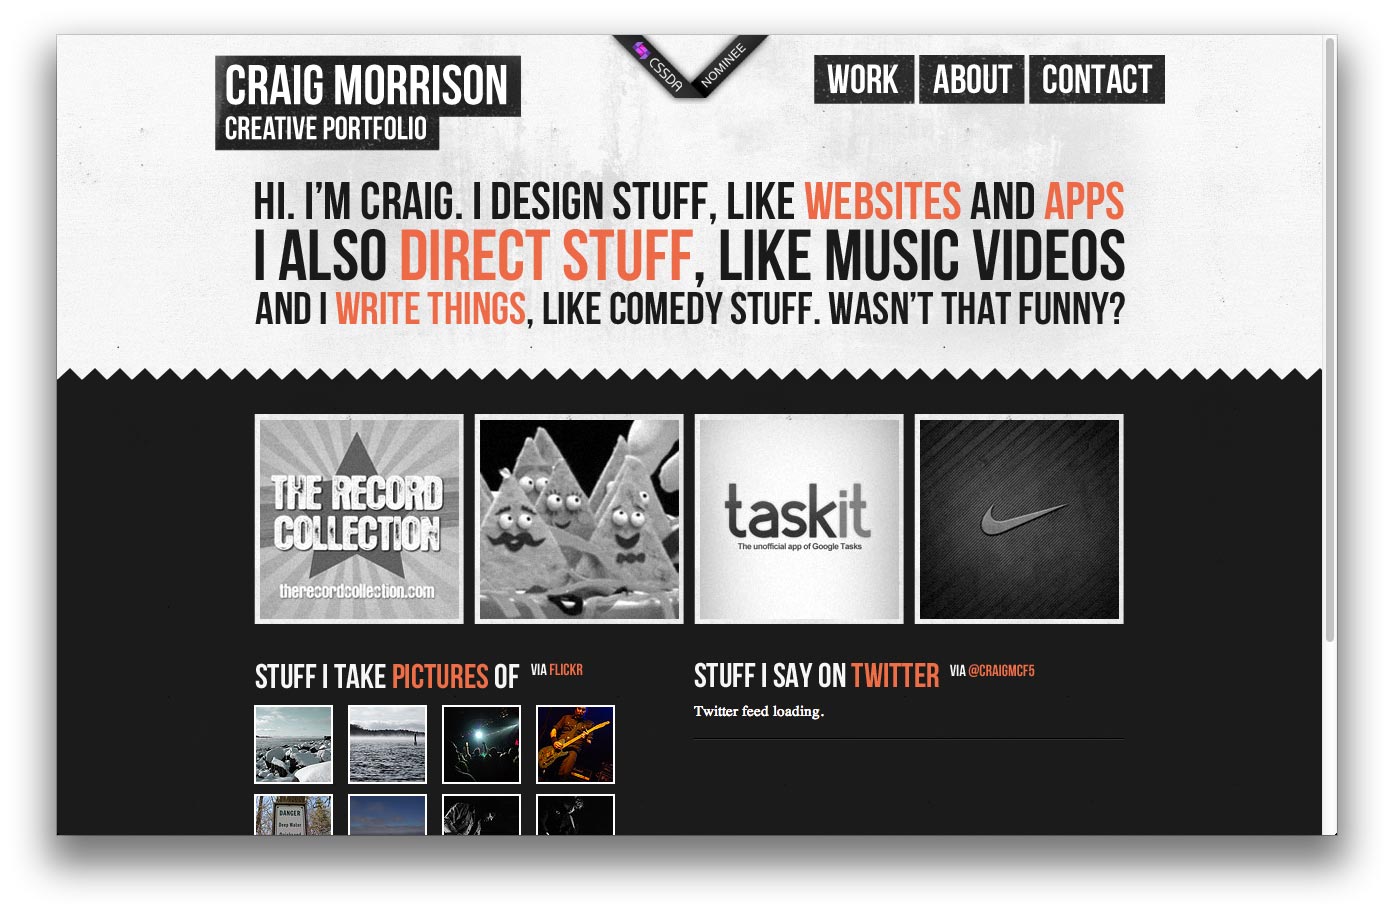 Craig Morrison's website